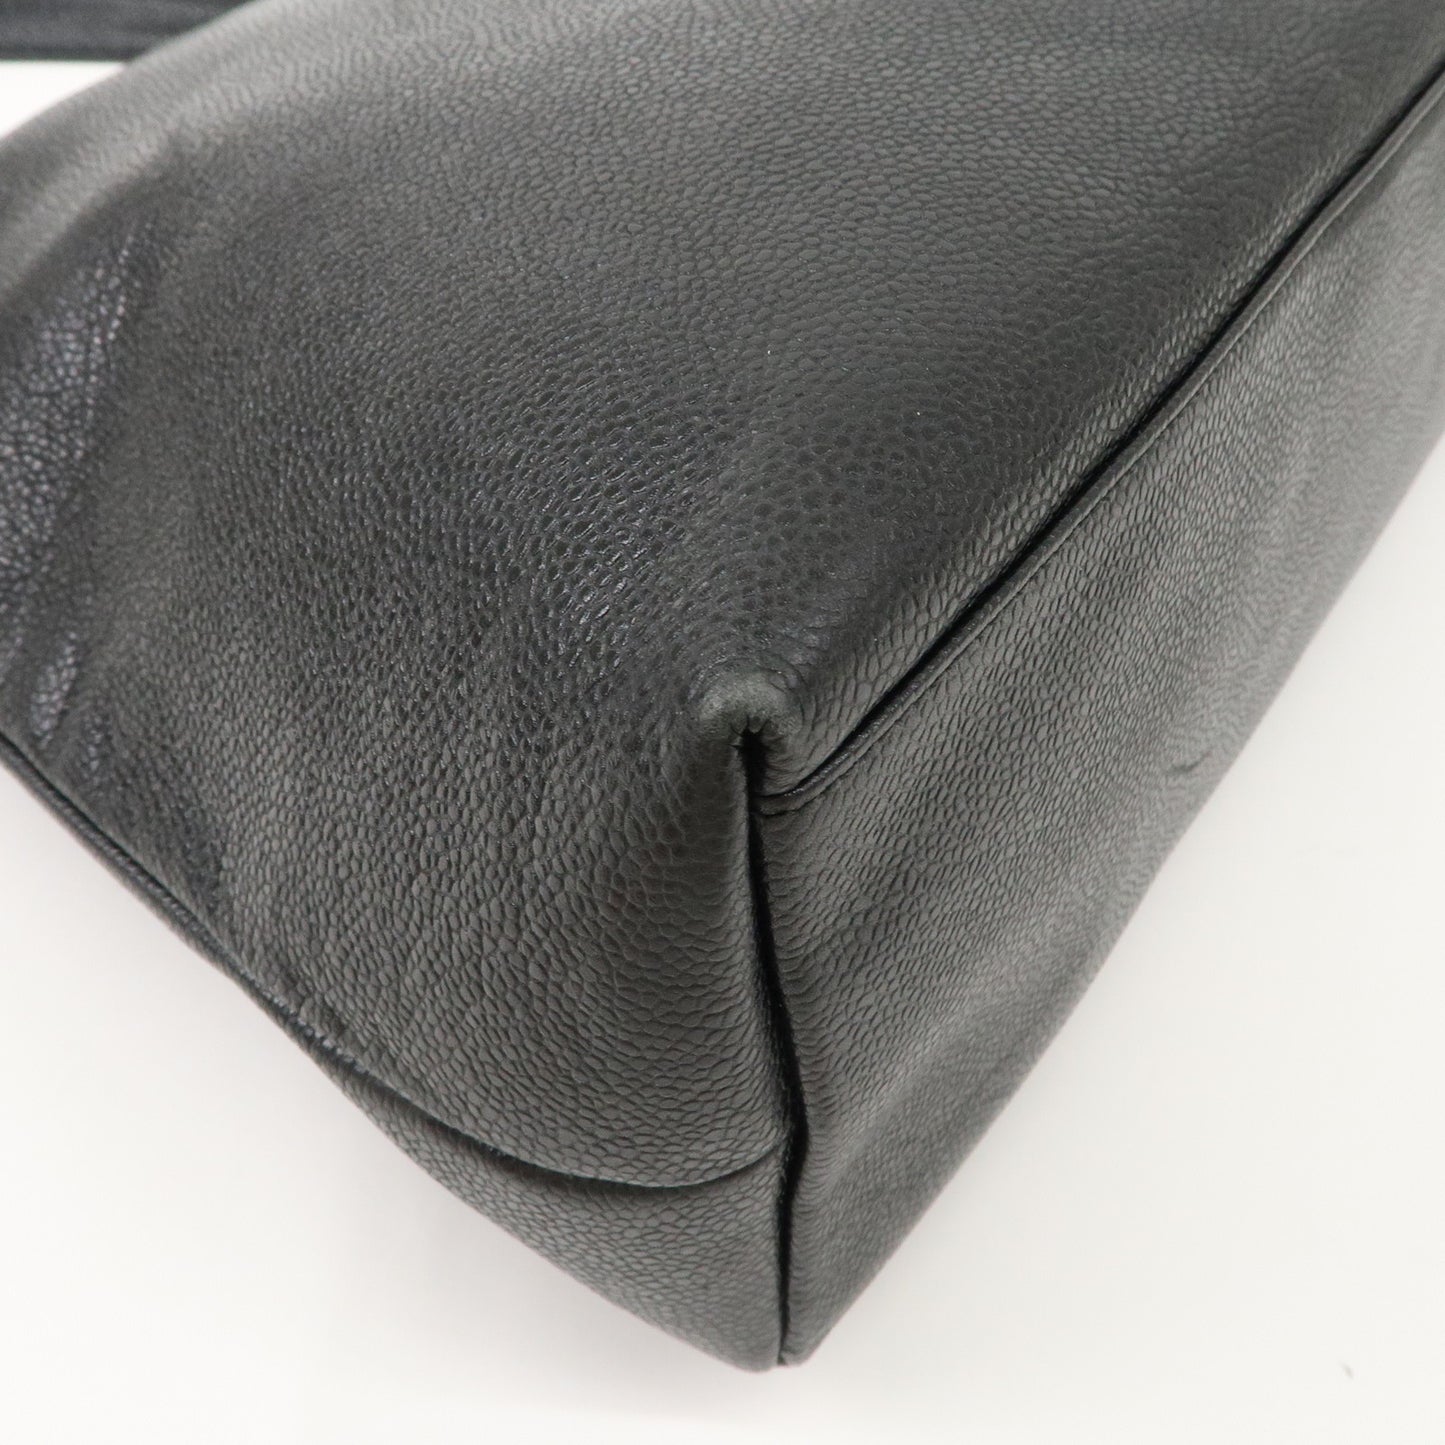 CHANEL Caviar Skin Coco Mark Chain Tote Bag Shoulder Bag Black